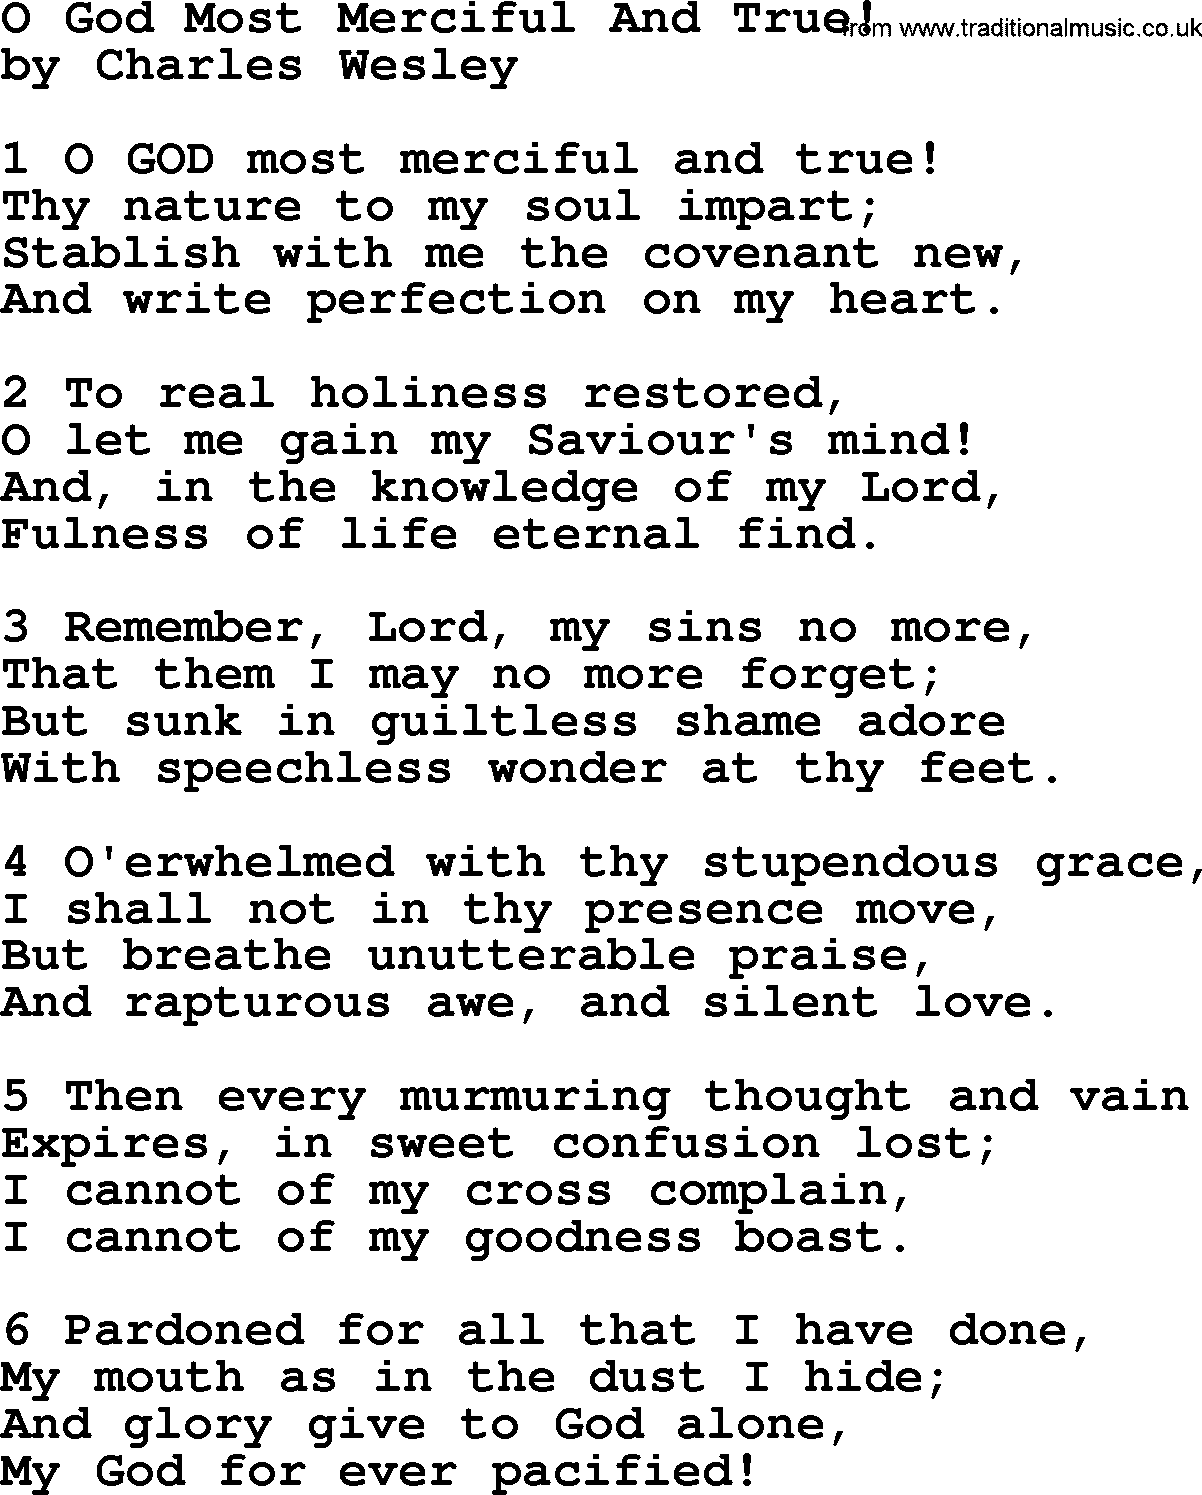 Charles Wesley hymn: O God Most Merciful And True!, lyrics